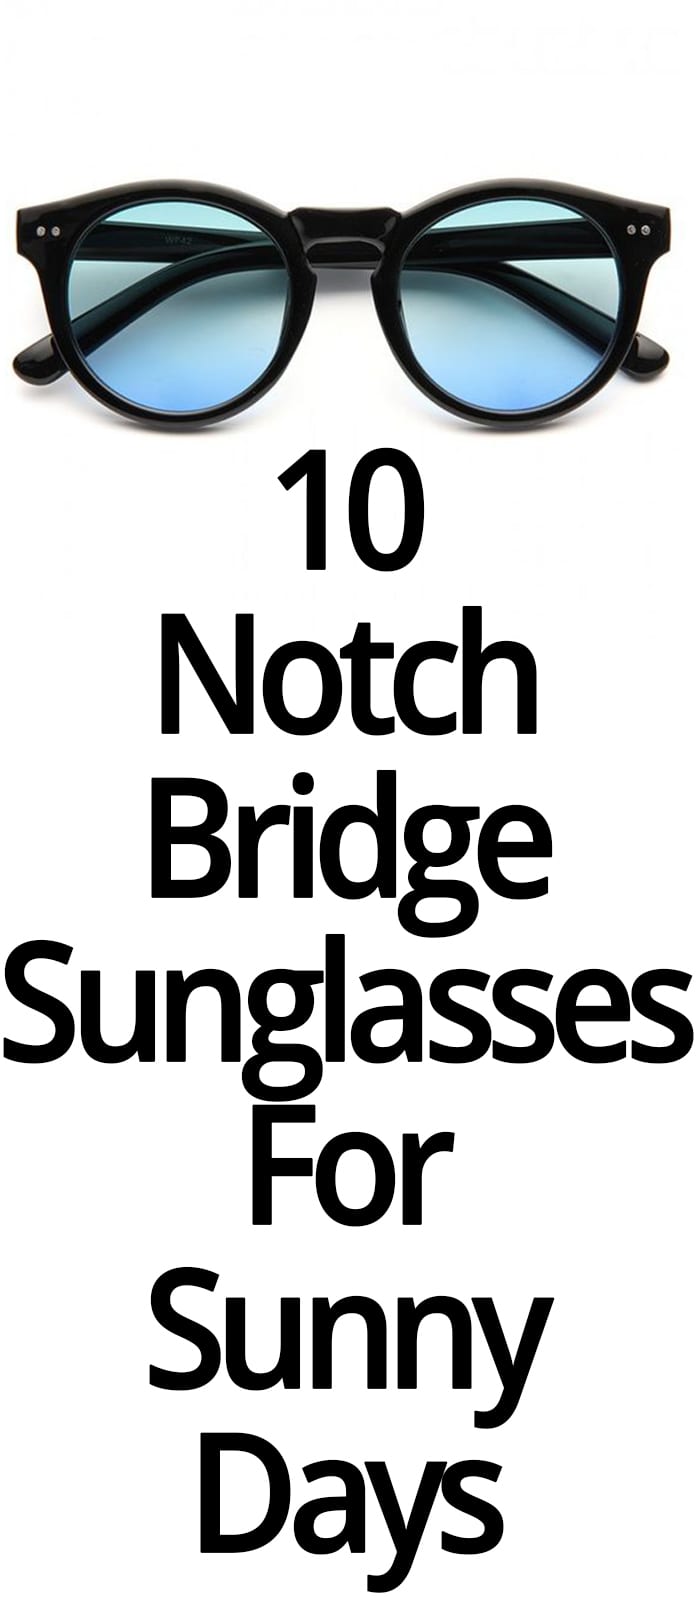 10 NOTCH BRIDGE SUNGLASSES